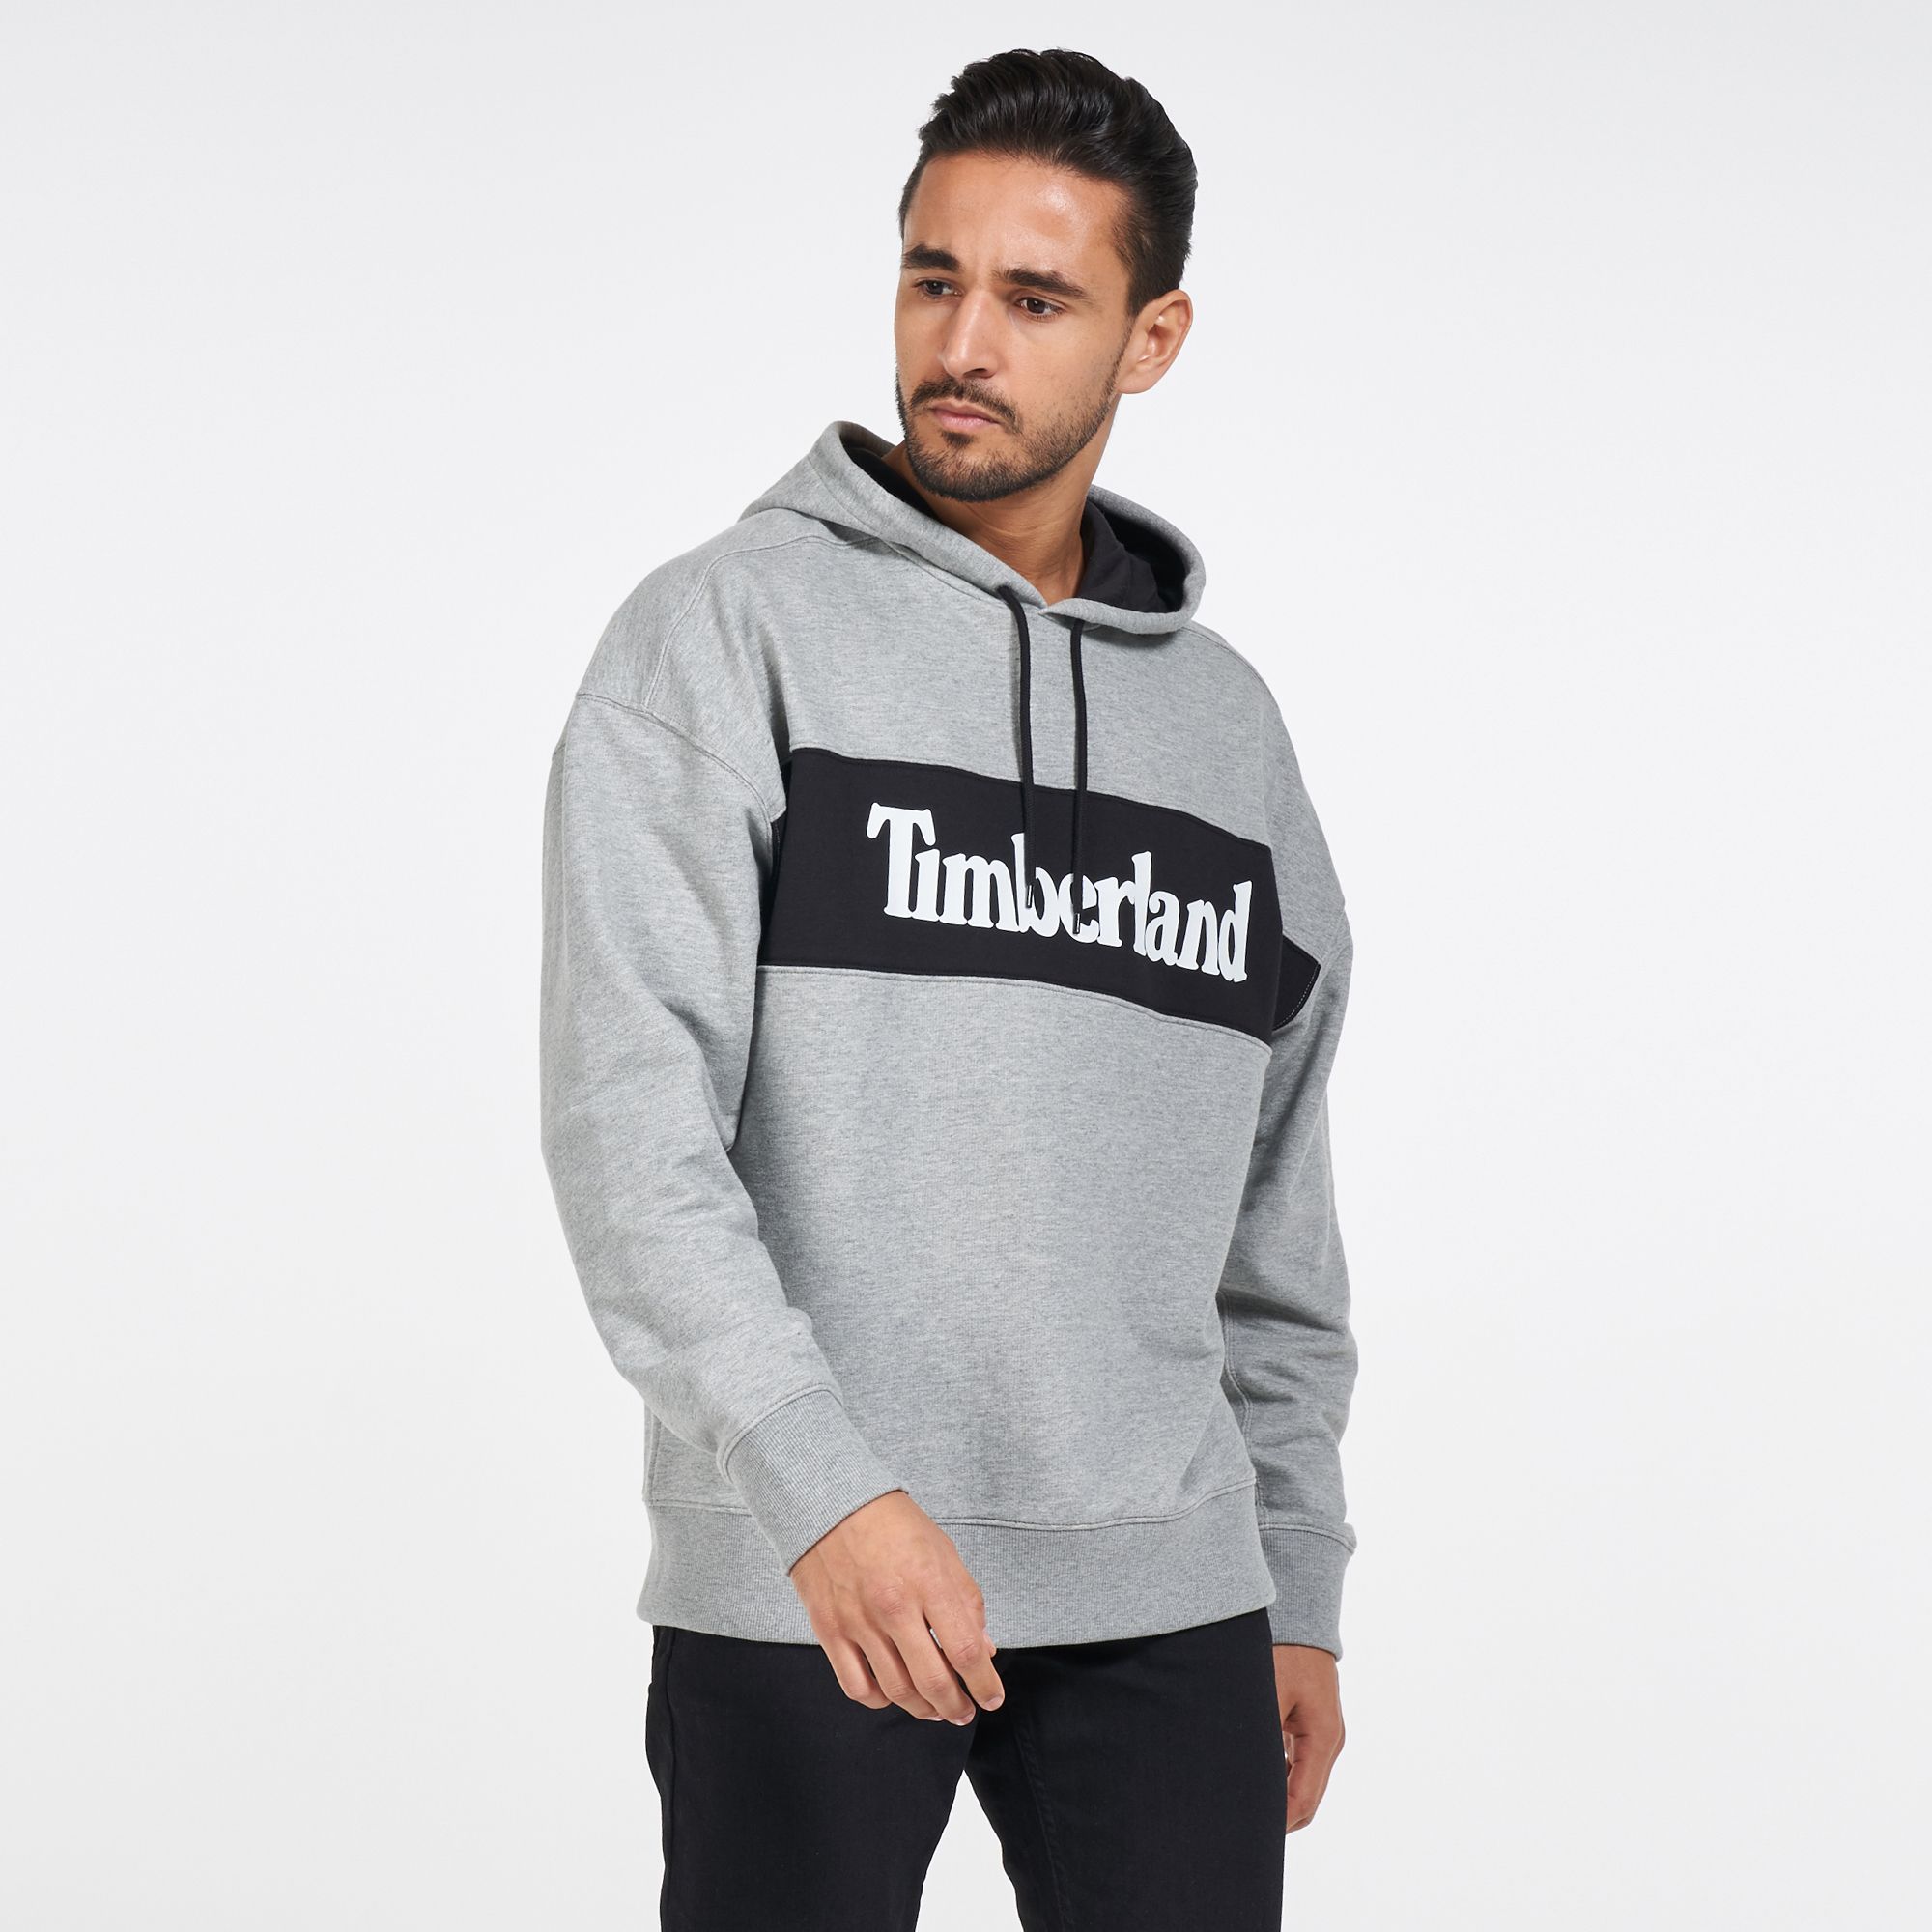 3xl timberland hoodie